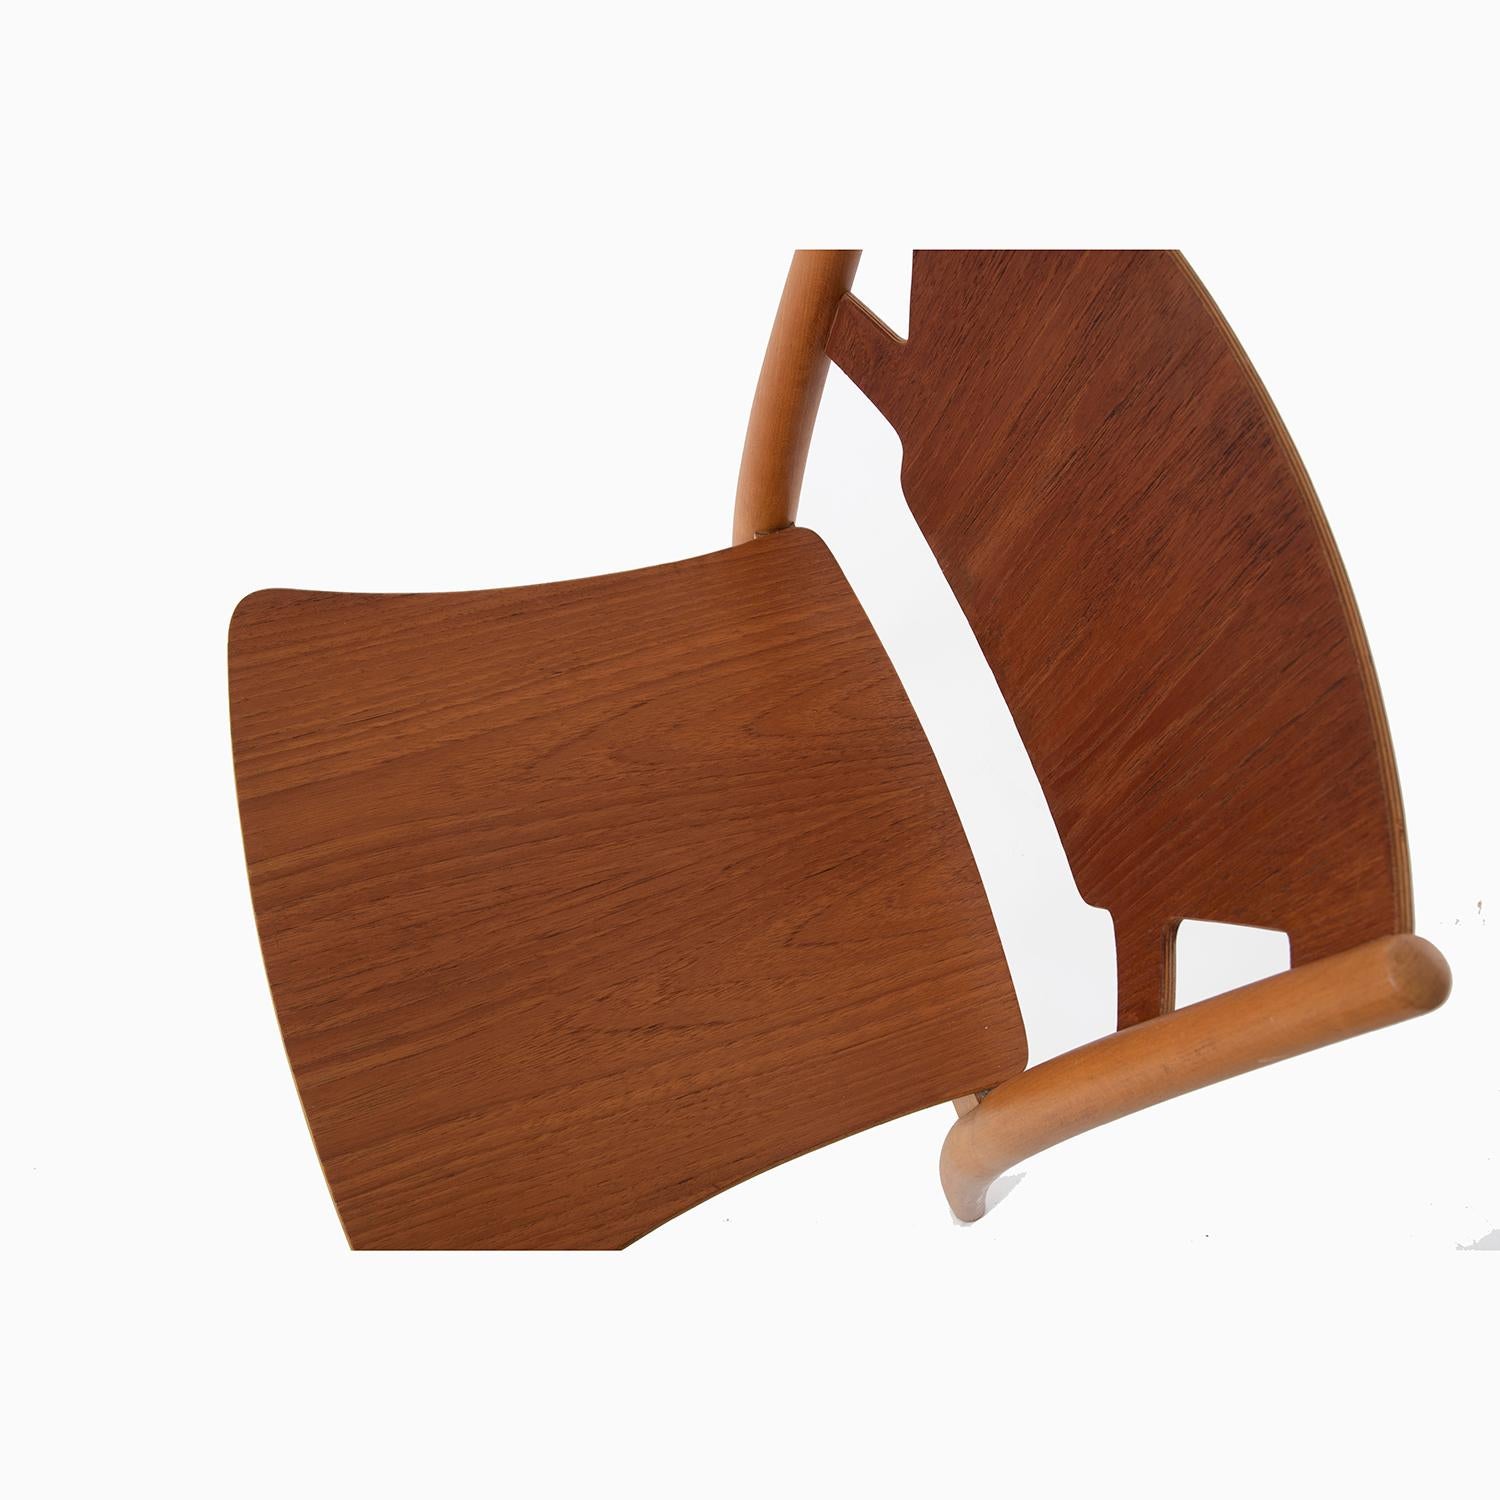 Danish Modern Hvidt & Molgaard Stacking Side Chair 1